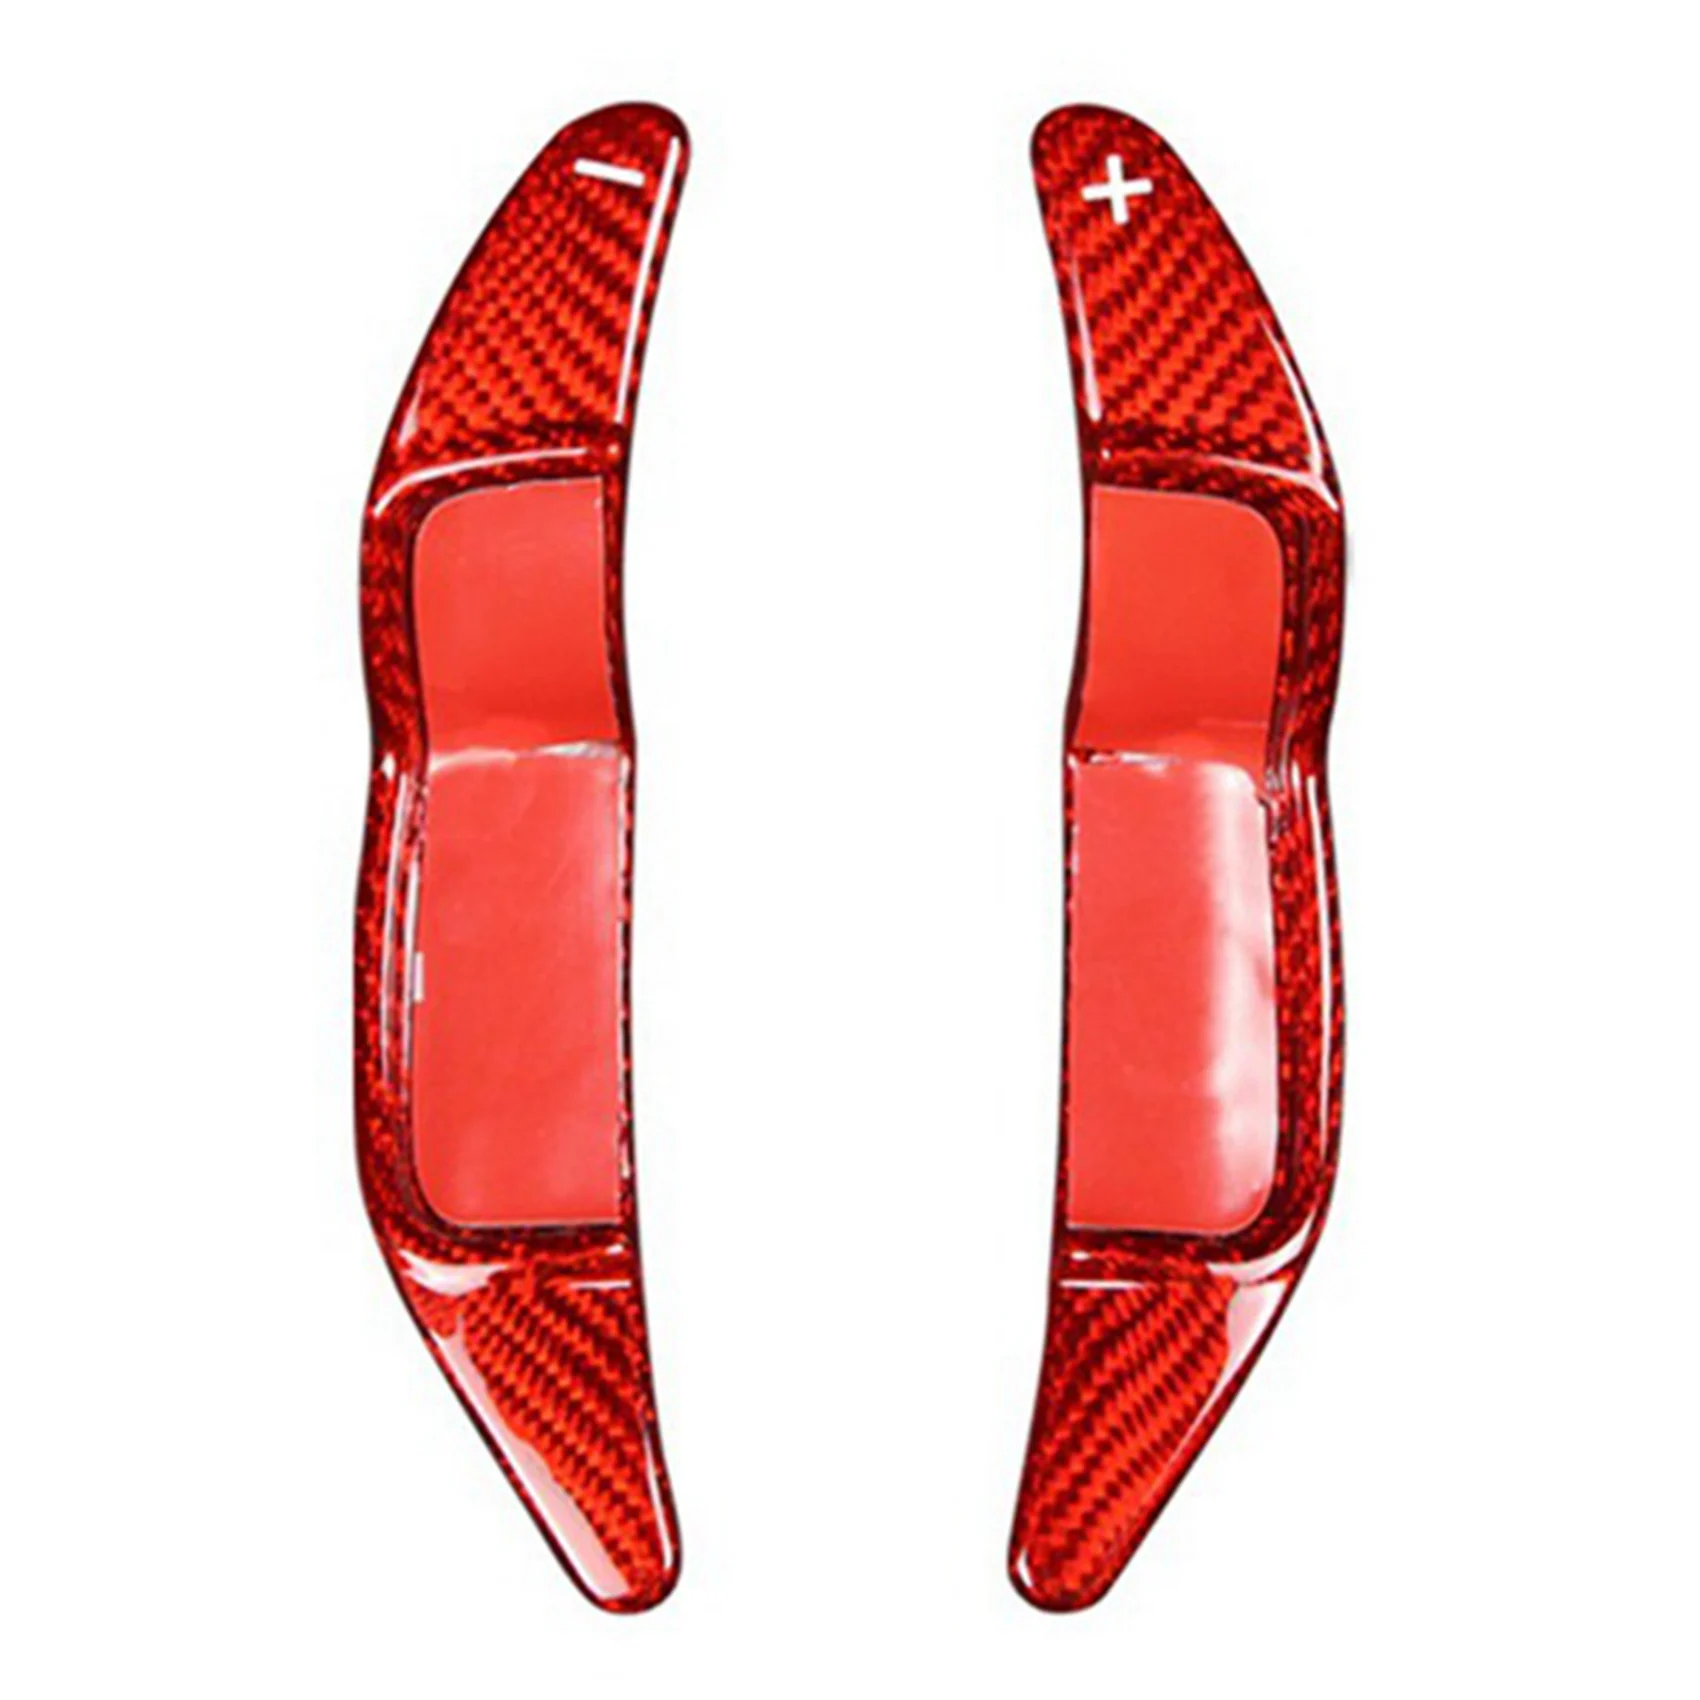 

Red Carbon Fiber Shift Paddles for BMW Mini R56 LCI Clubman R55 R57 R58 R59 R60 Steering Wheel DSG Paddle Extension